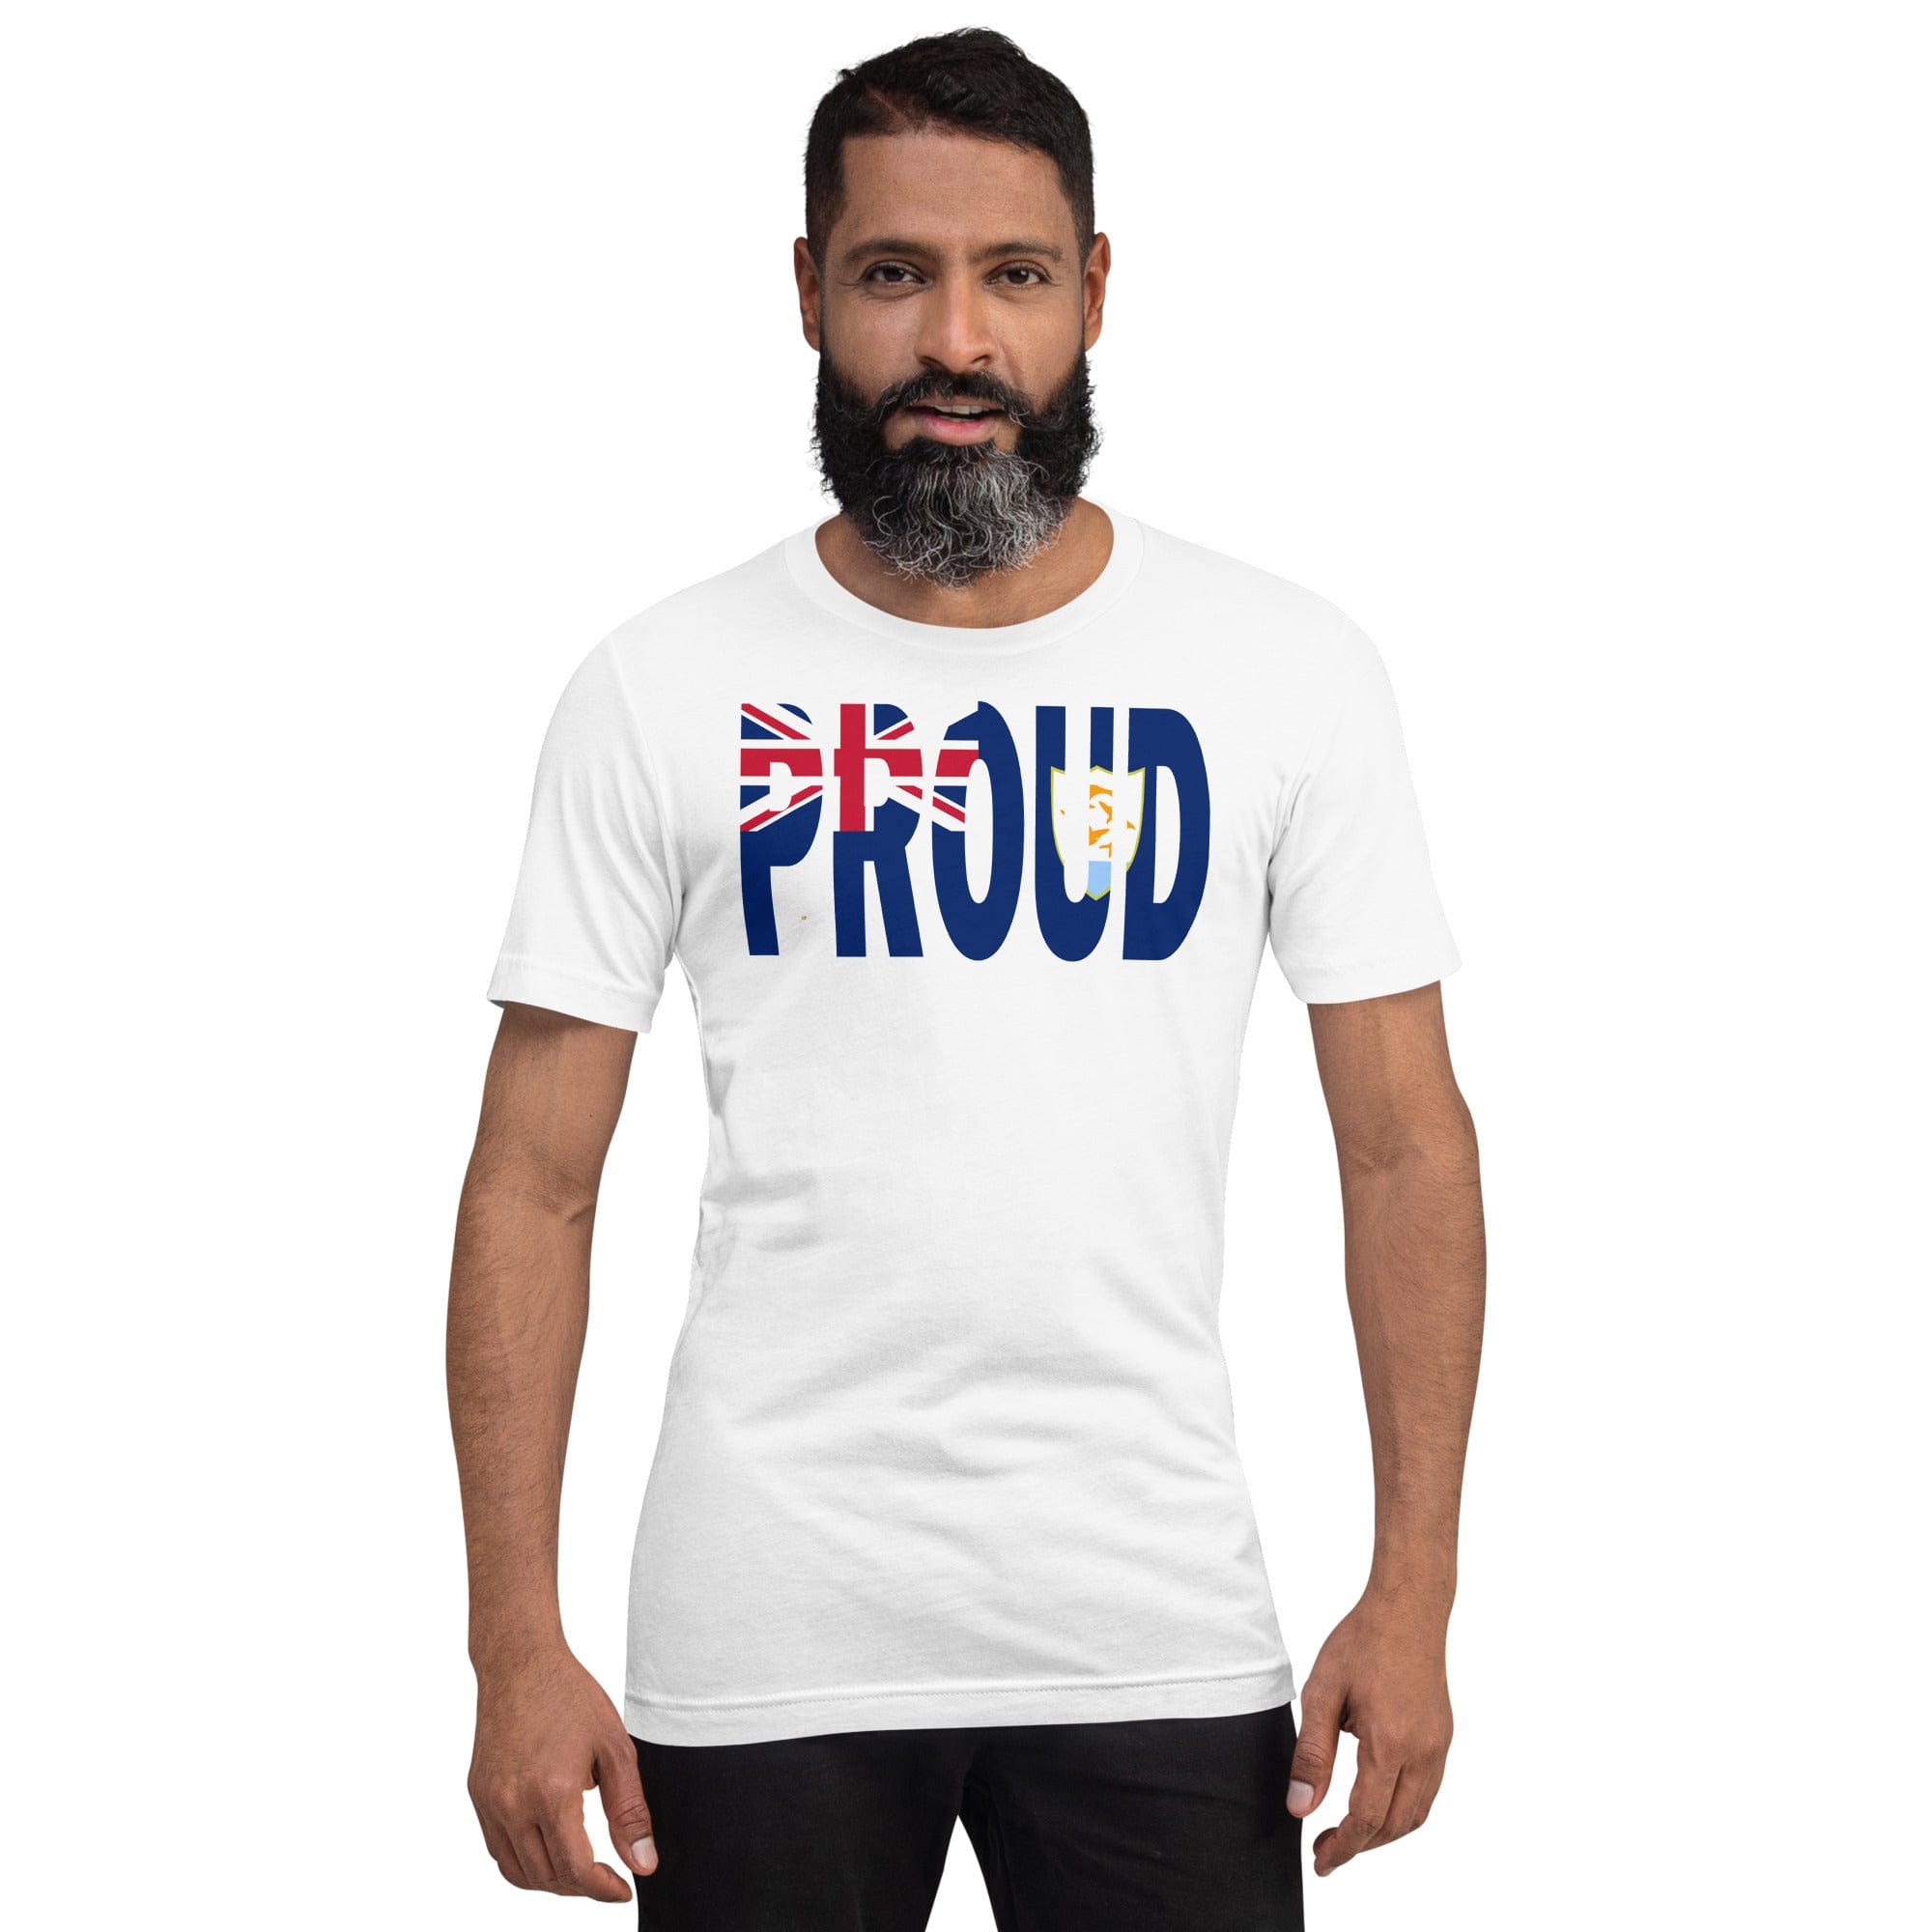 Proud Anguilla Flag white color t-shirt on a black man.